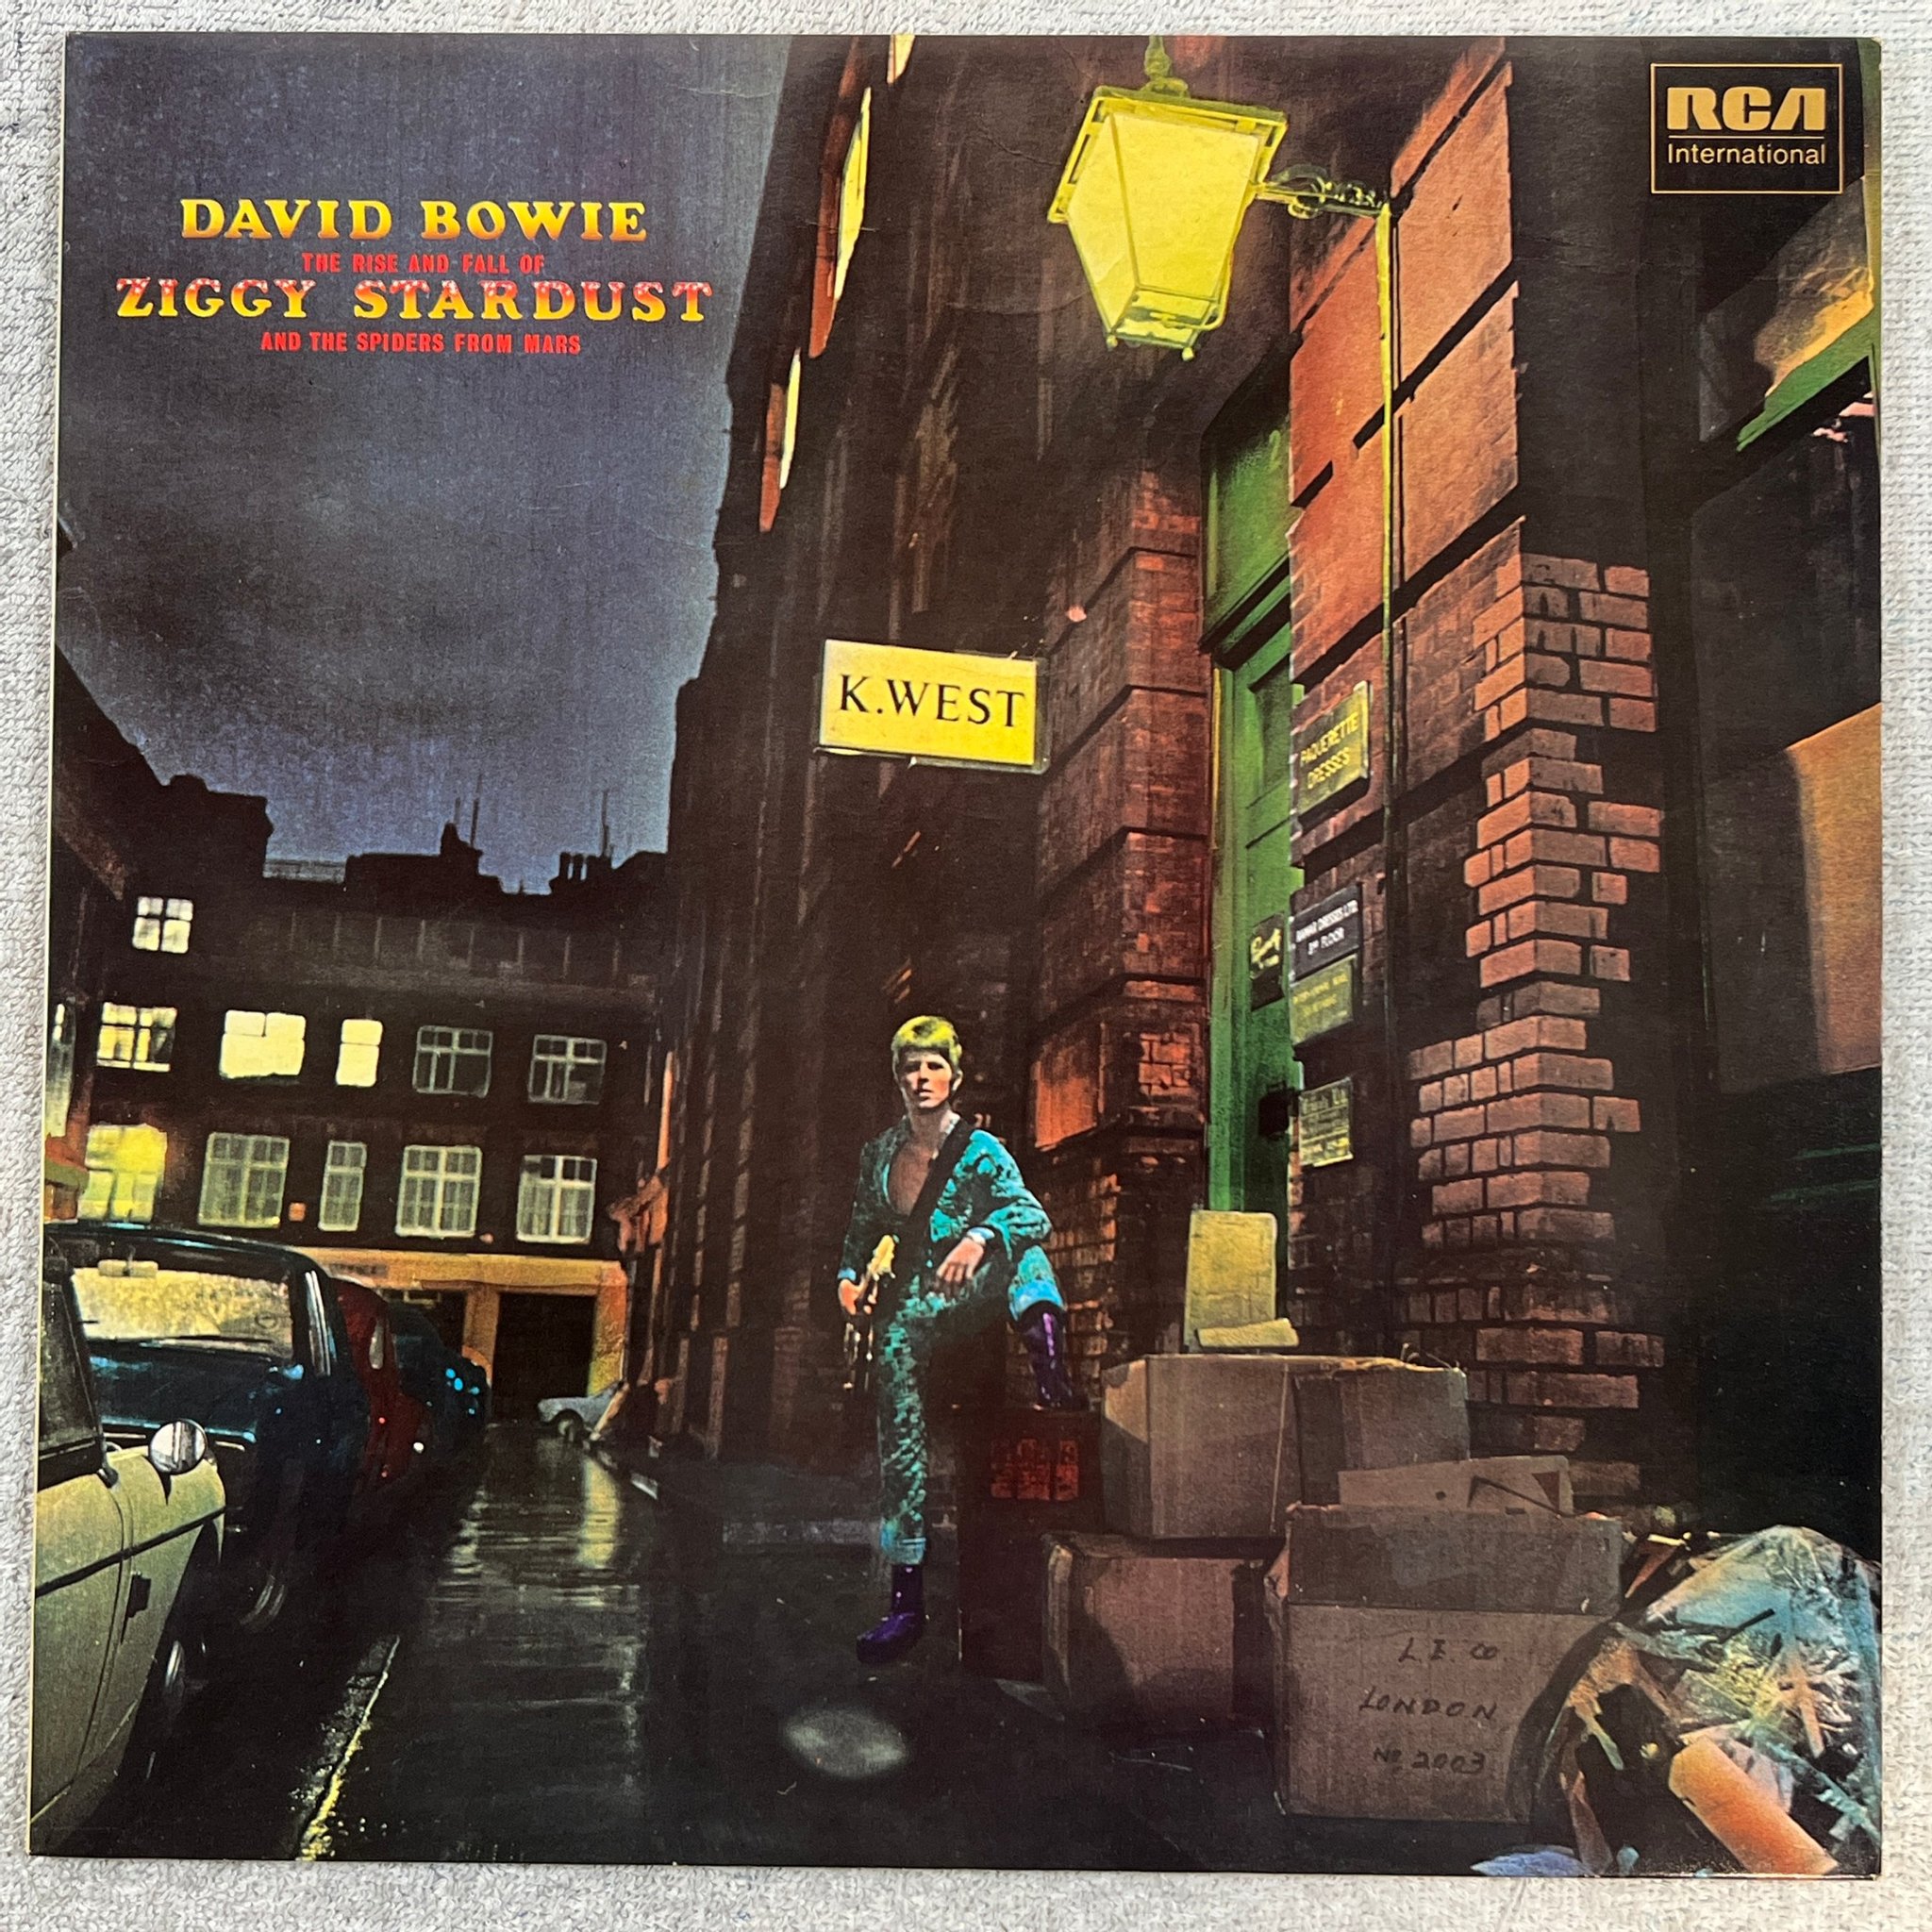 Omslagsbild för skivan DAVID BOWIE the rise and fall of Ziggy Stardust LP UK RCA INTS 5063